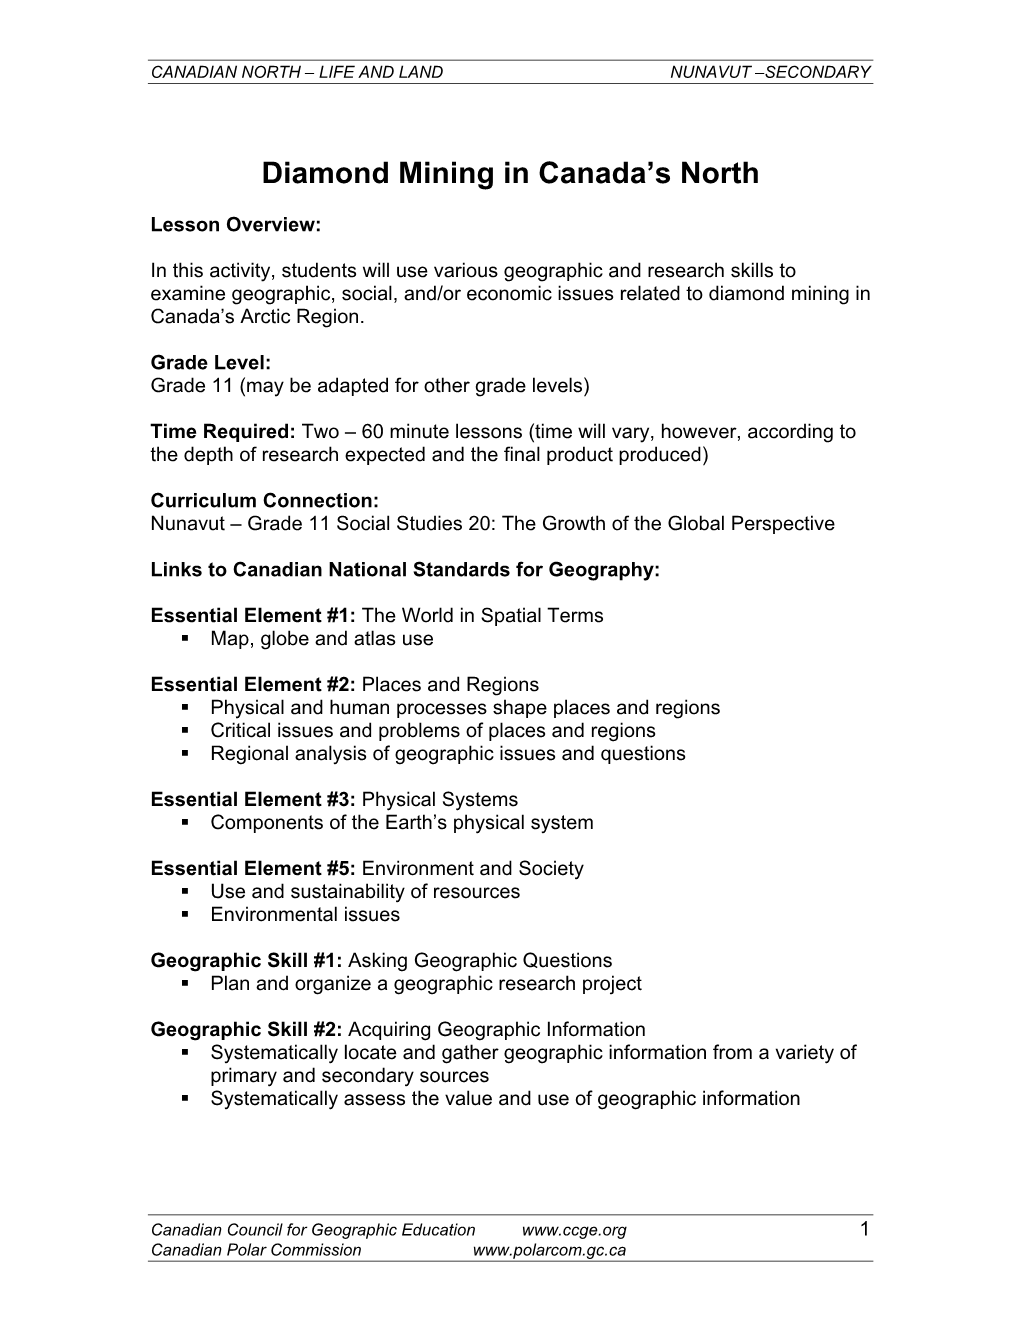 Diamond Mining in Canada's North